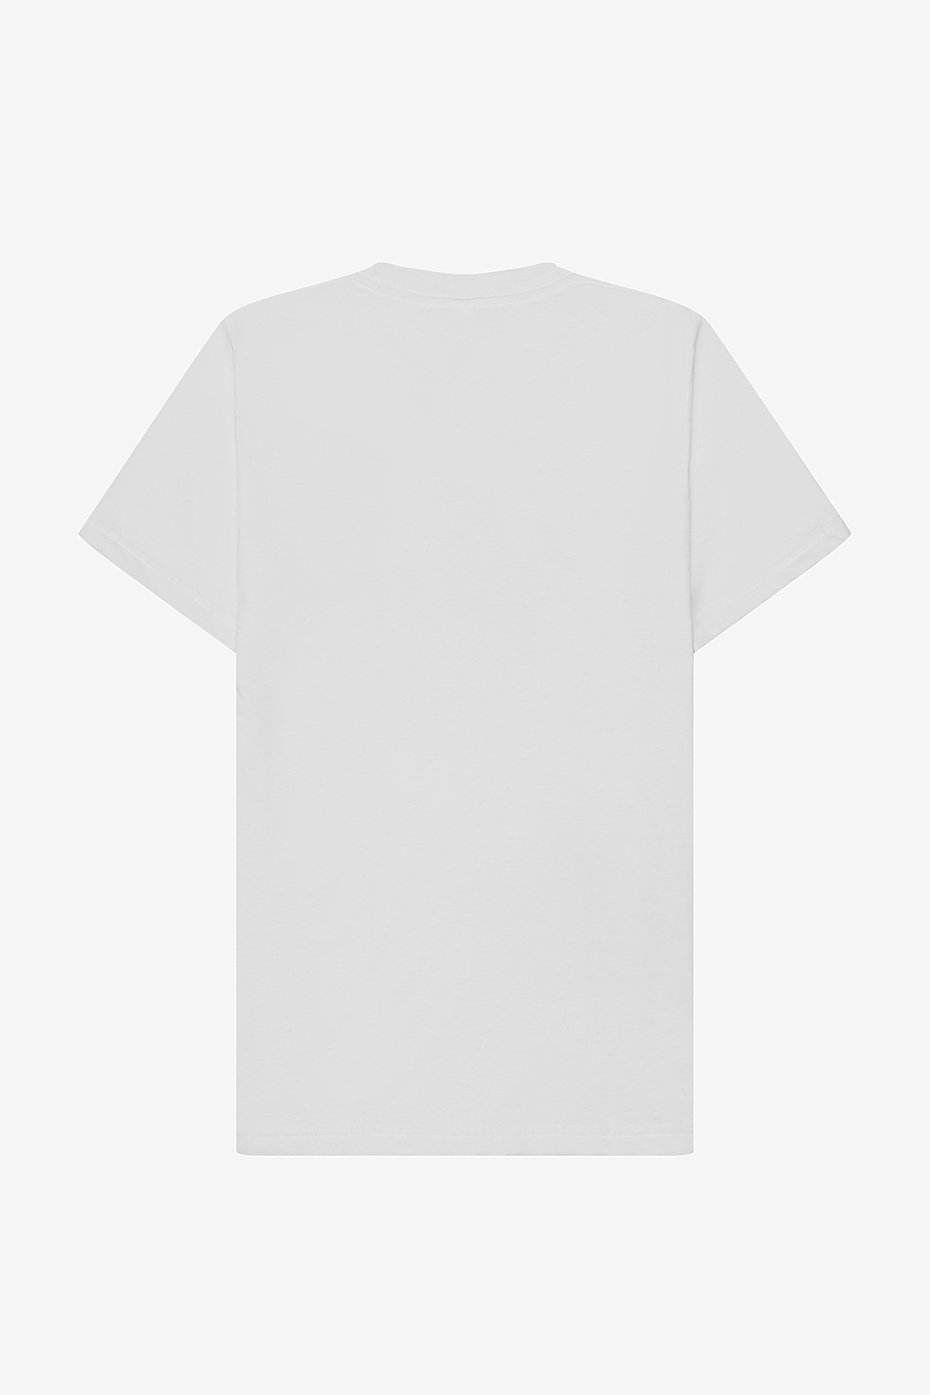 Text Logo Design Streetwear Cotton Jersey Blank Tshirt kids Drop Shoulder  Custom Loose Fit